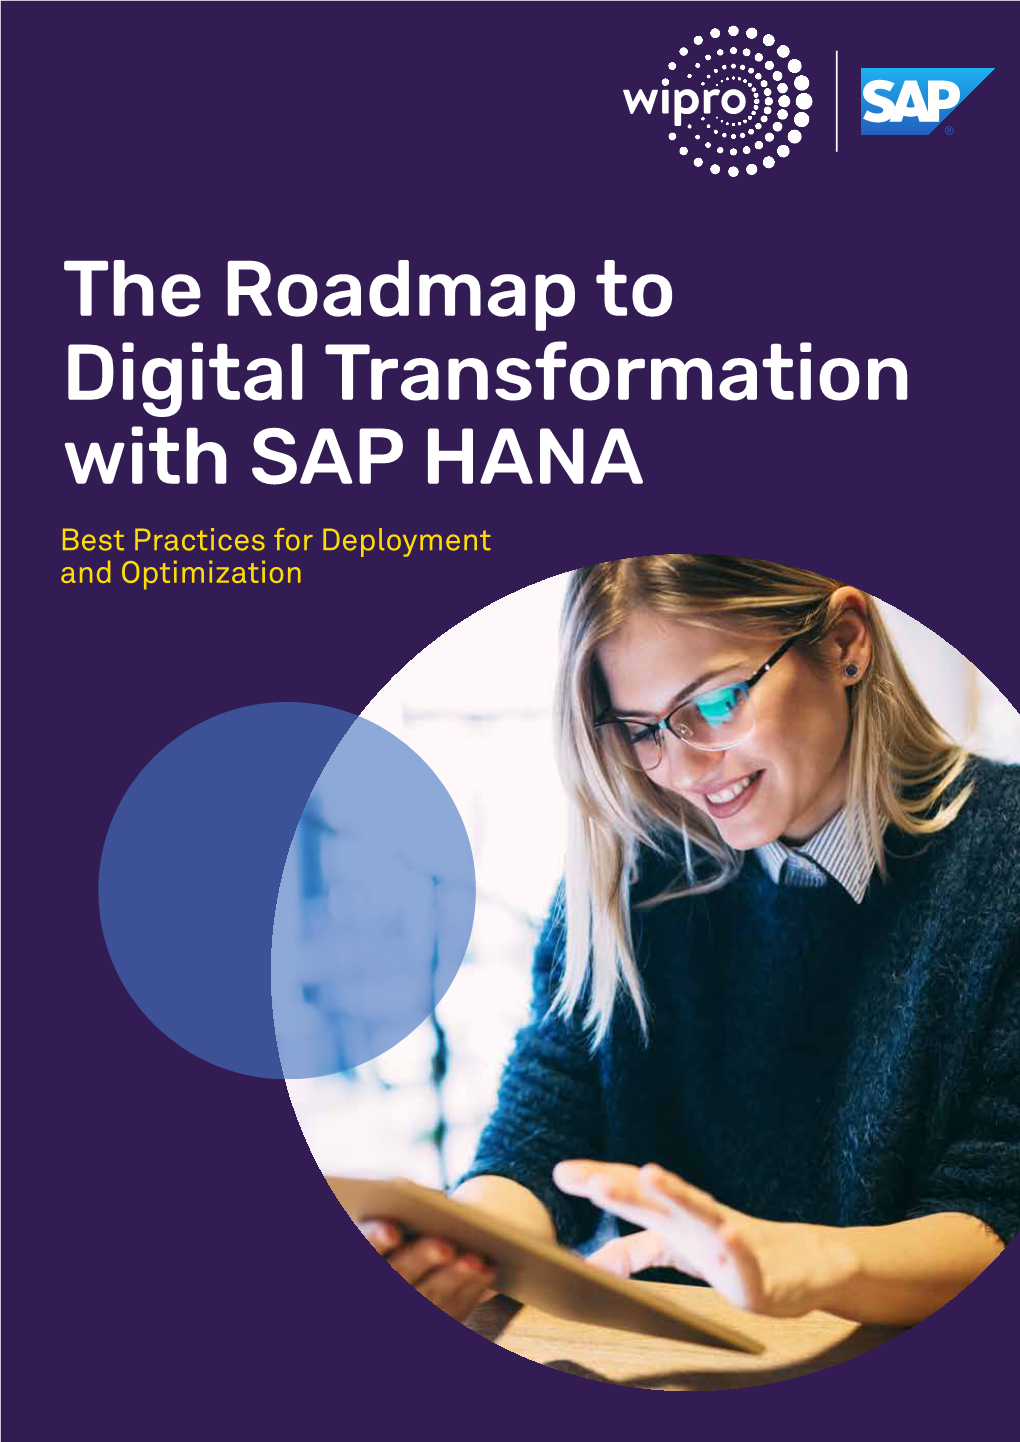 The Roadmap to Digital Transformation with SAP HANA